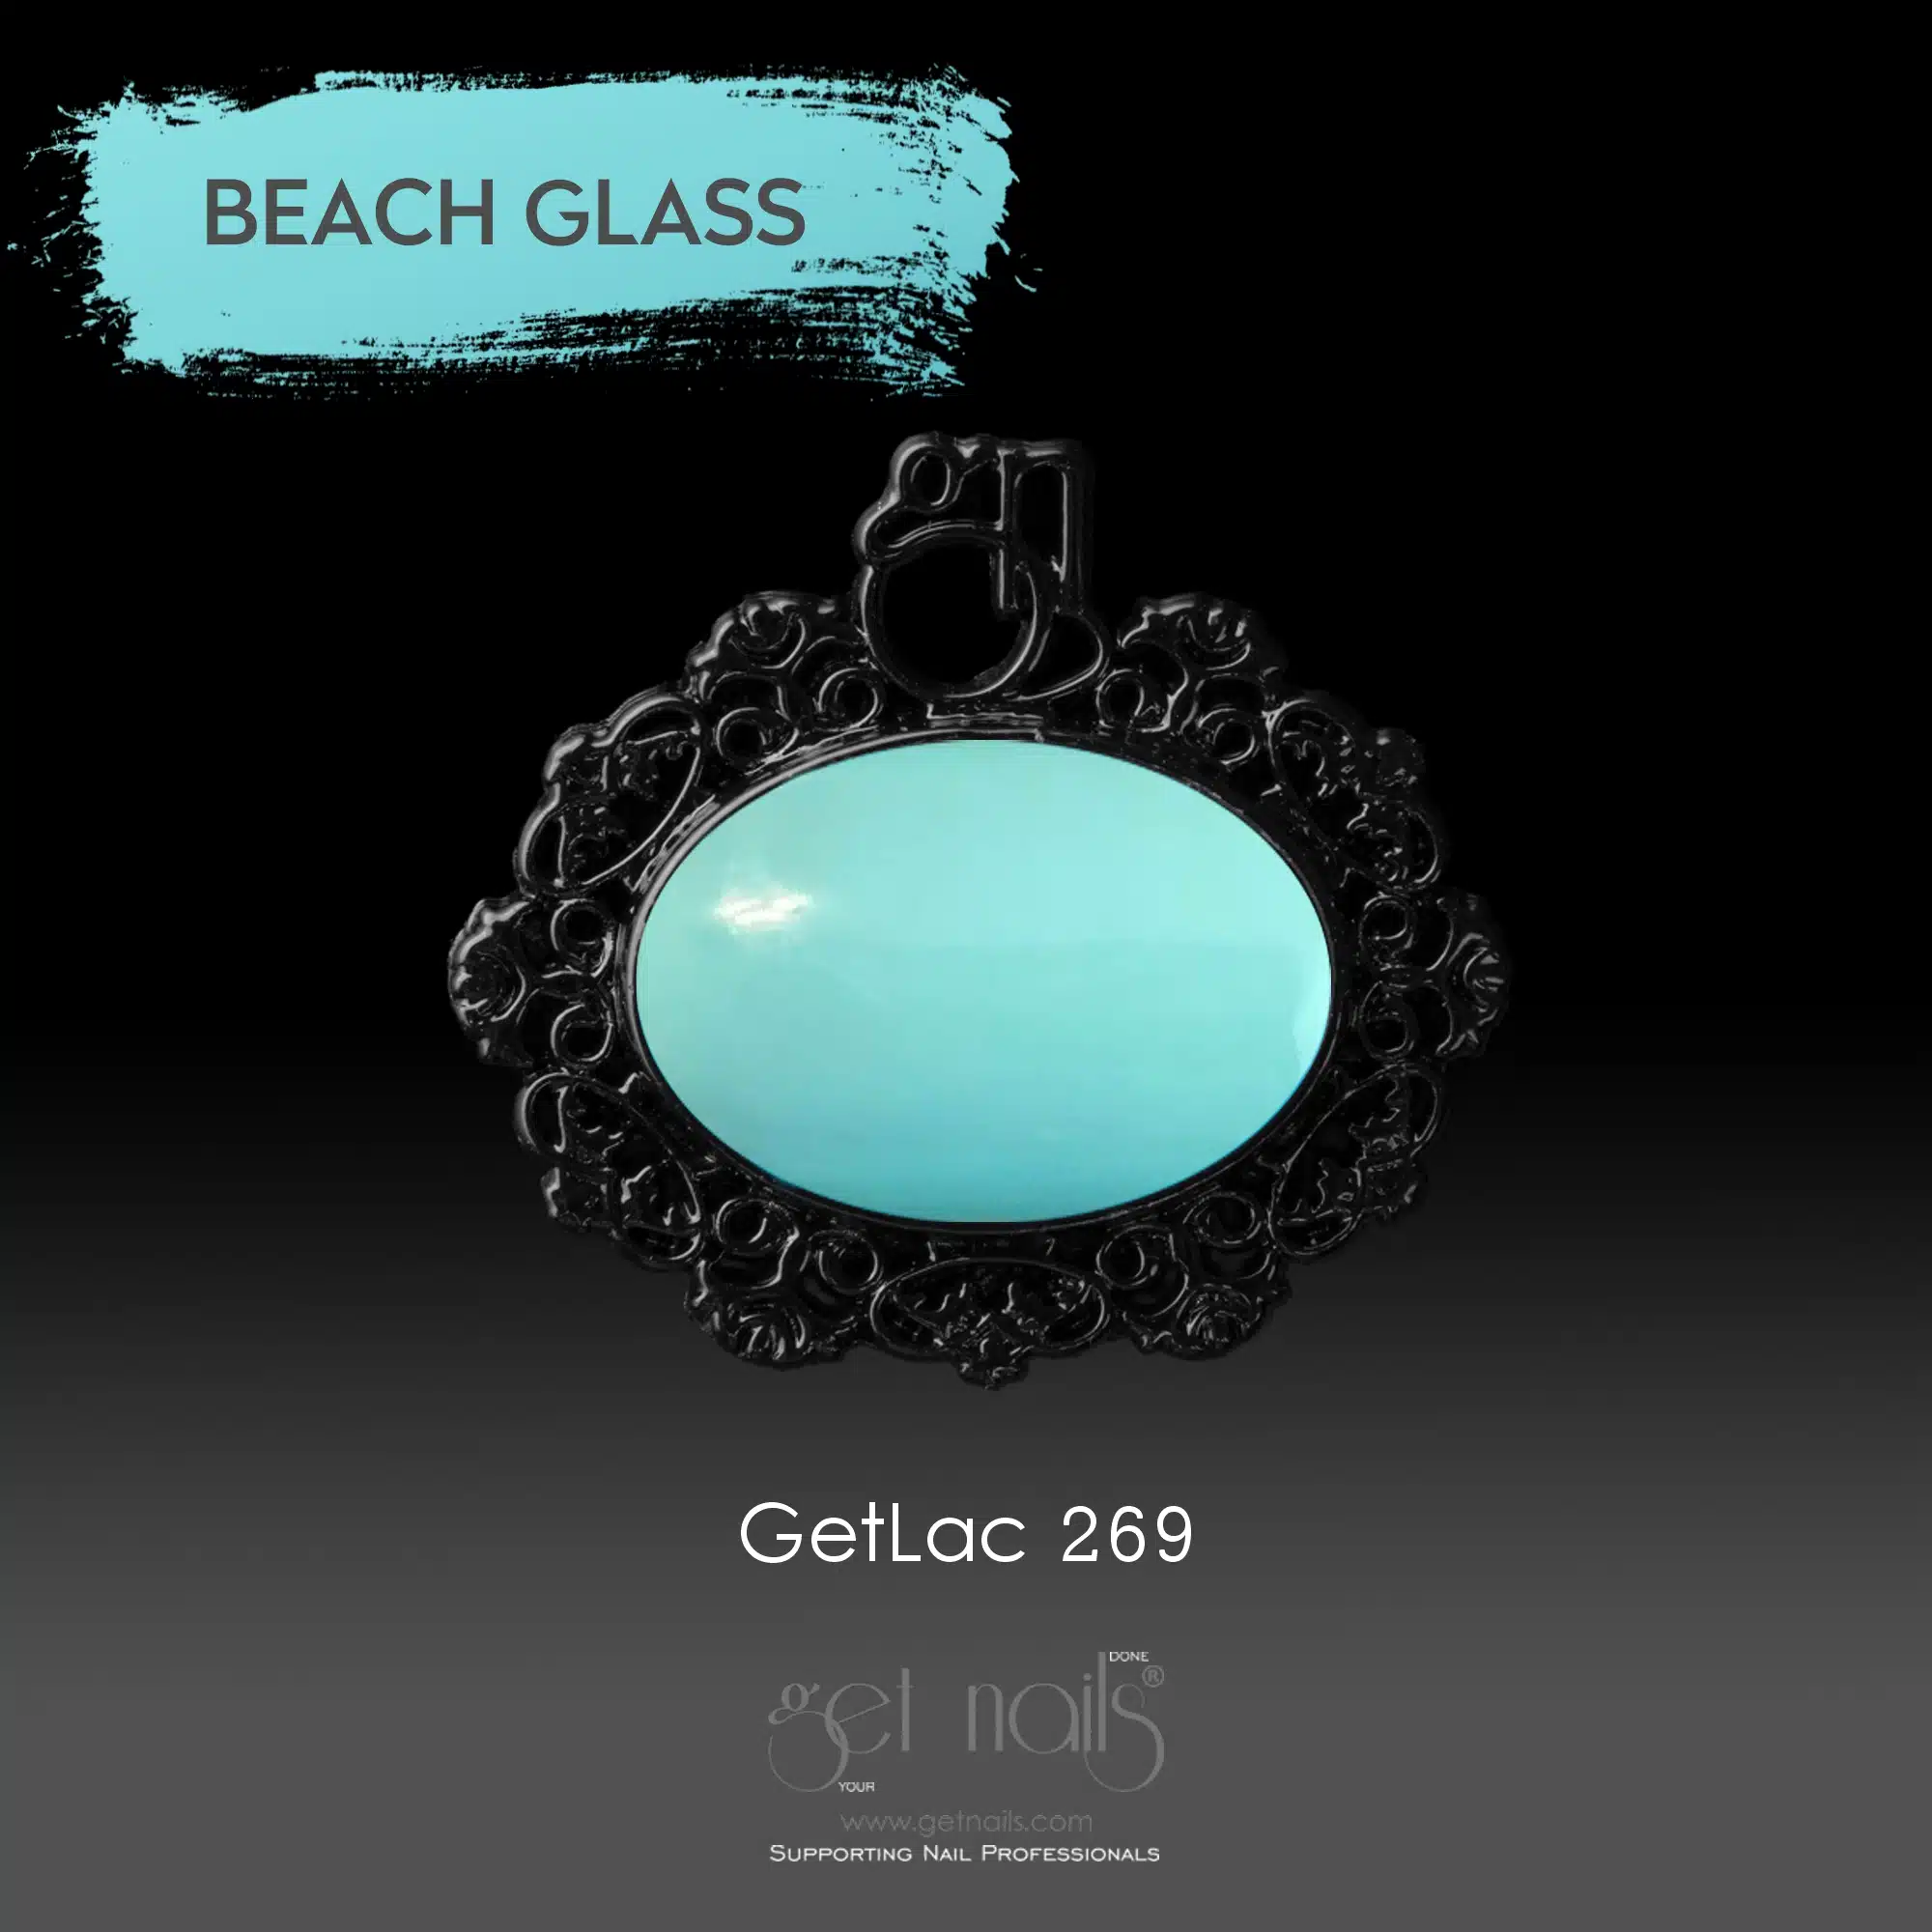 Get Nails Austria - GetLac 269 15 г Пляжное стекло